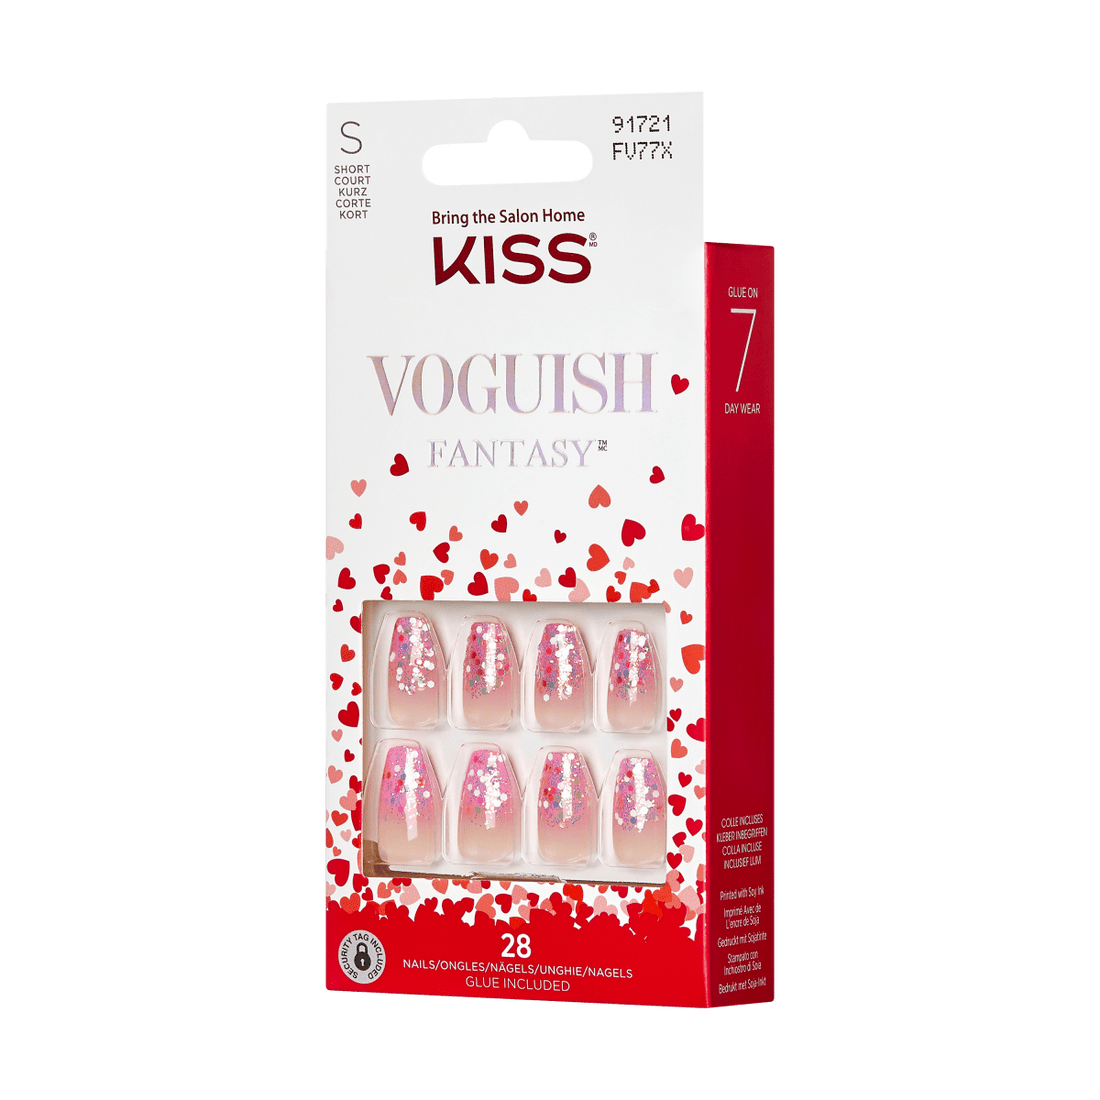 KISS Voguish Fantasy, Press-On Nails, Date Night, Purple, Short Coffin, 28ct